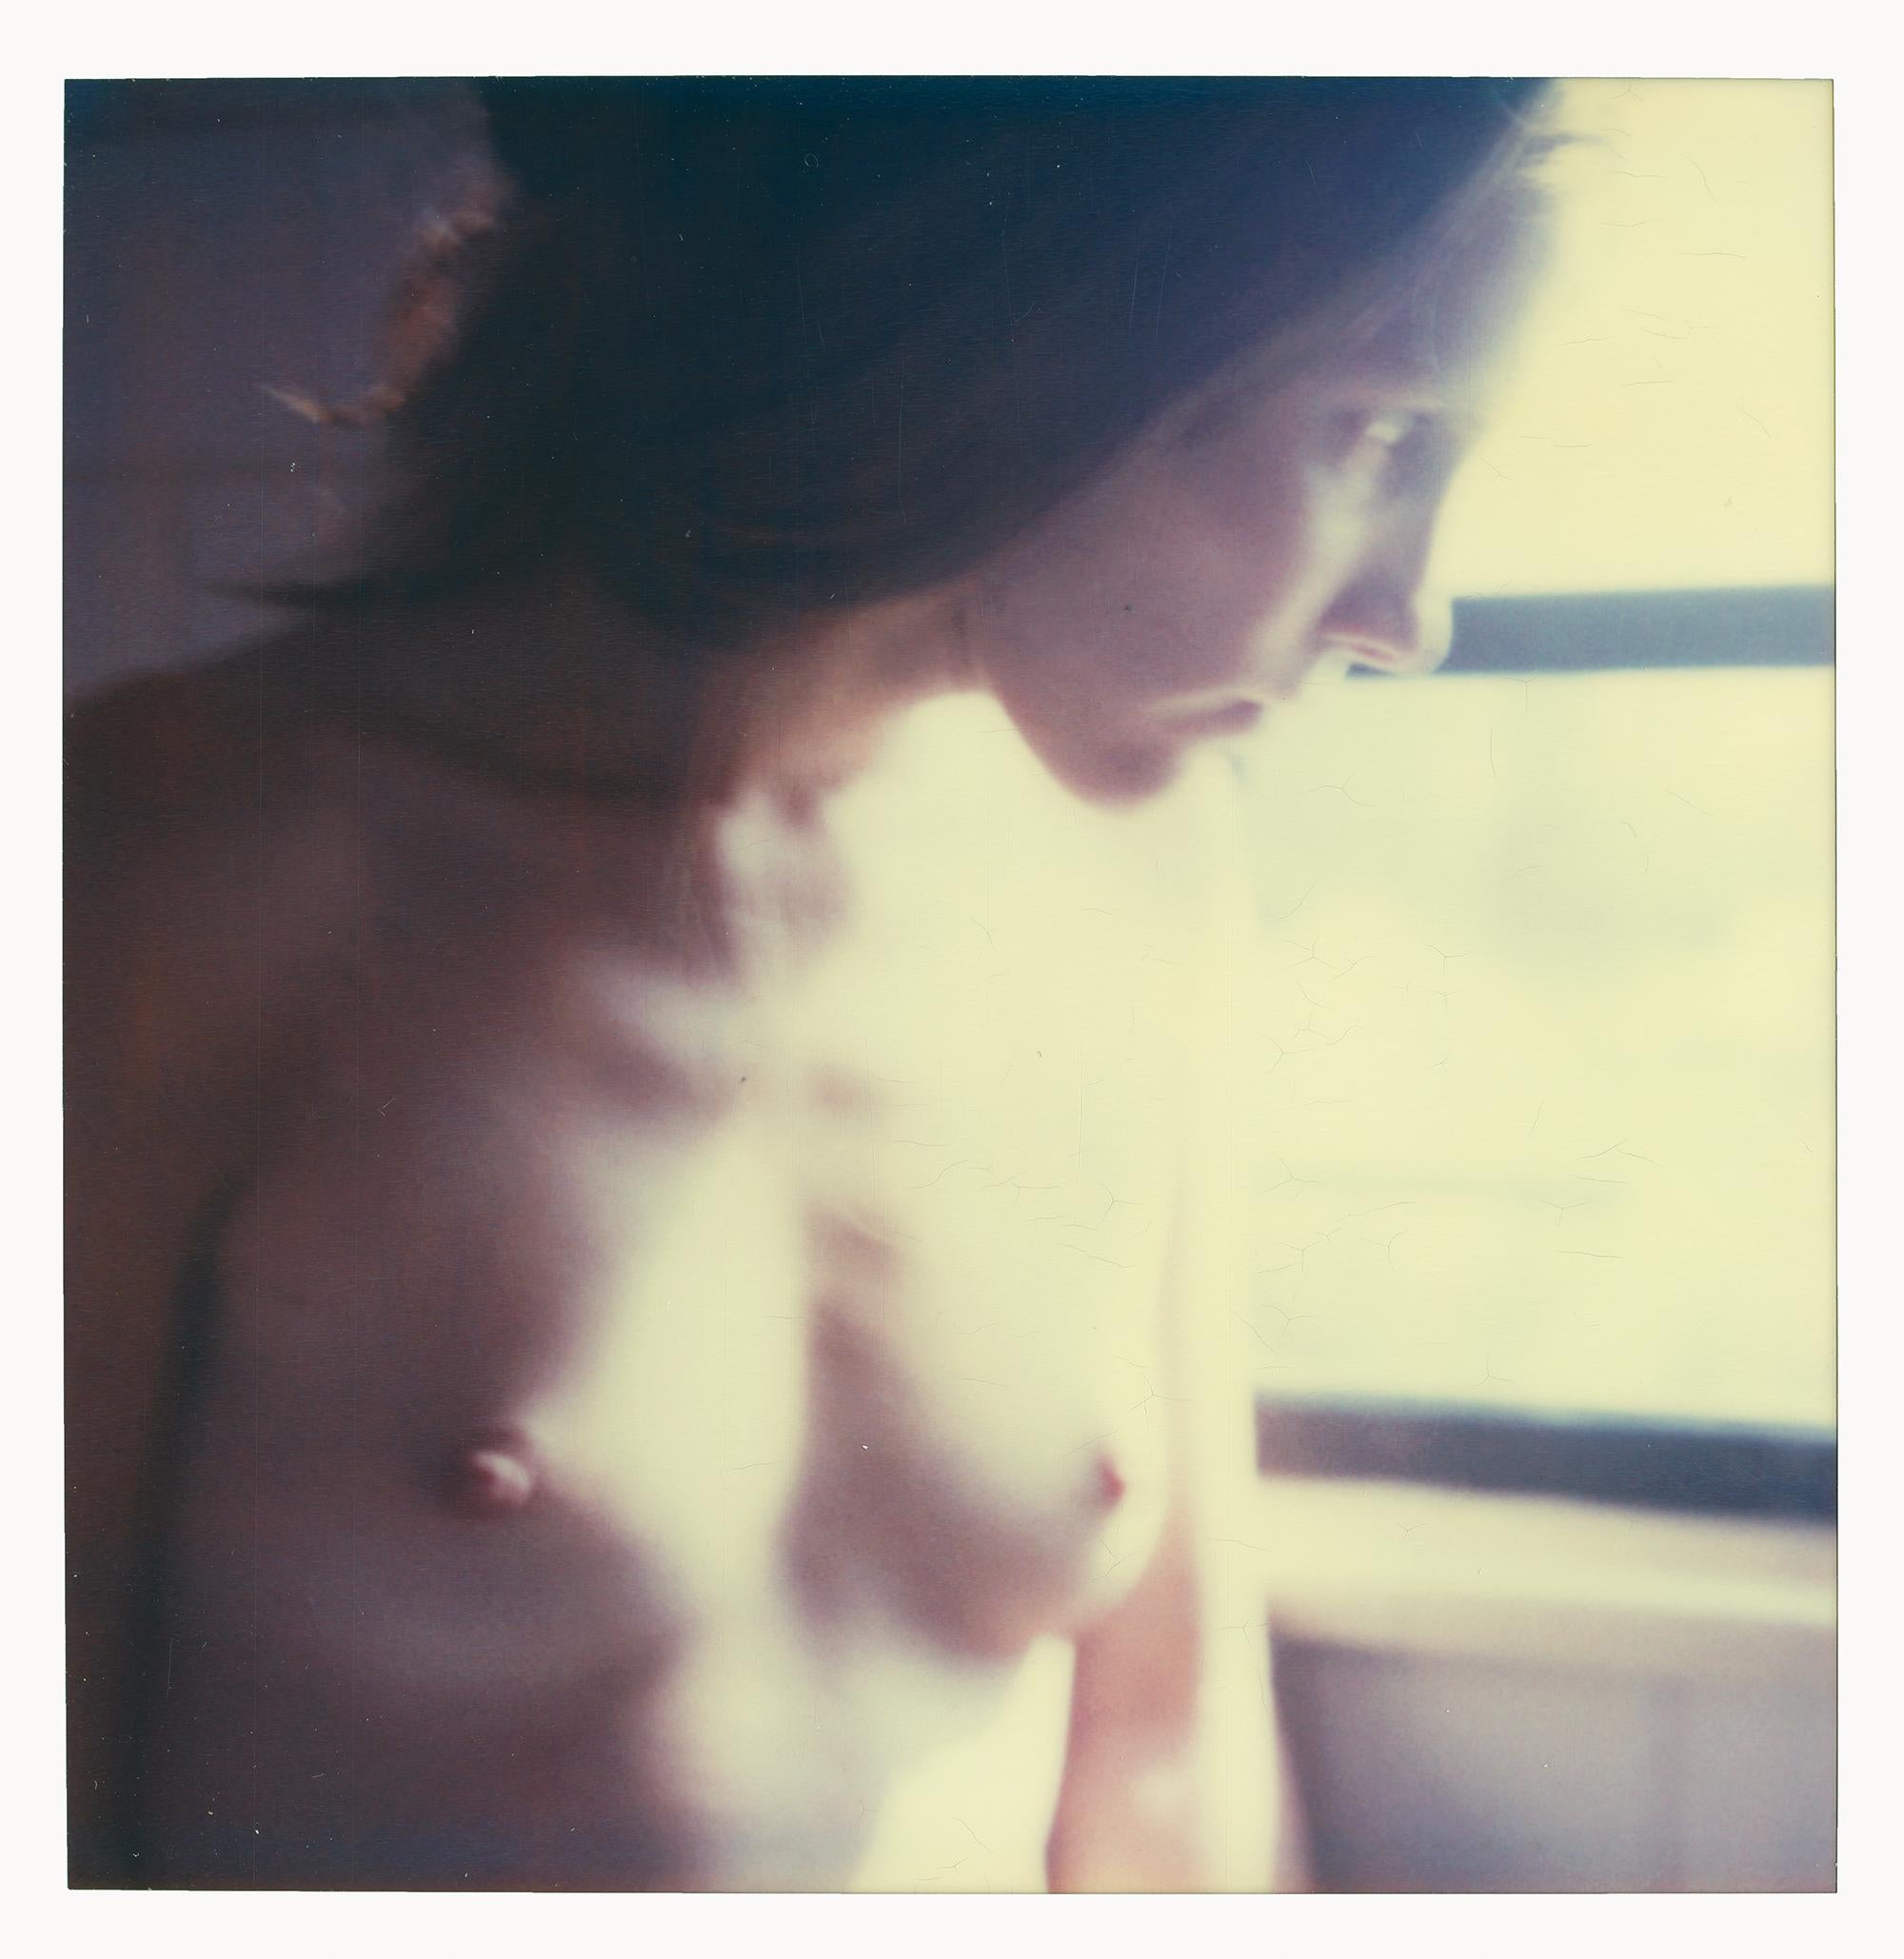 Stefanie Schneider Color Photograph - Girl Nude at Window - Bathtime III (29 Palms, CA) based on a Polaroid